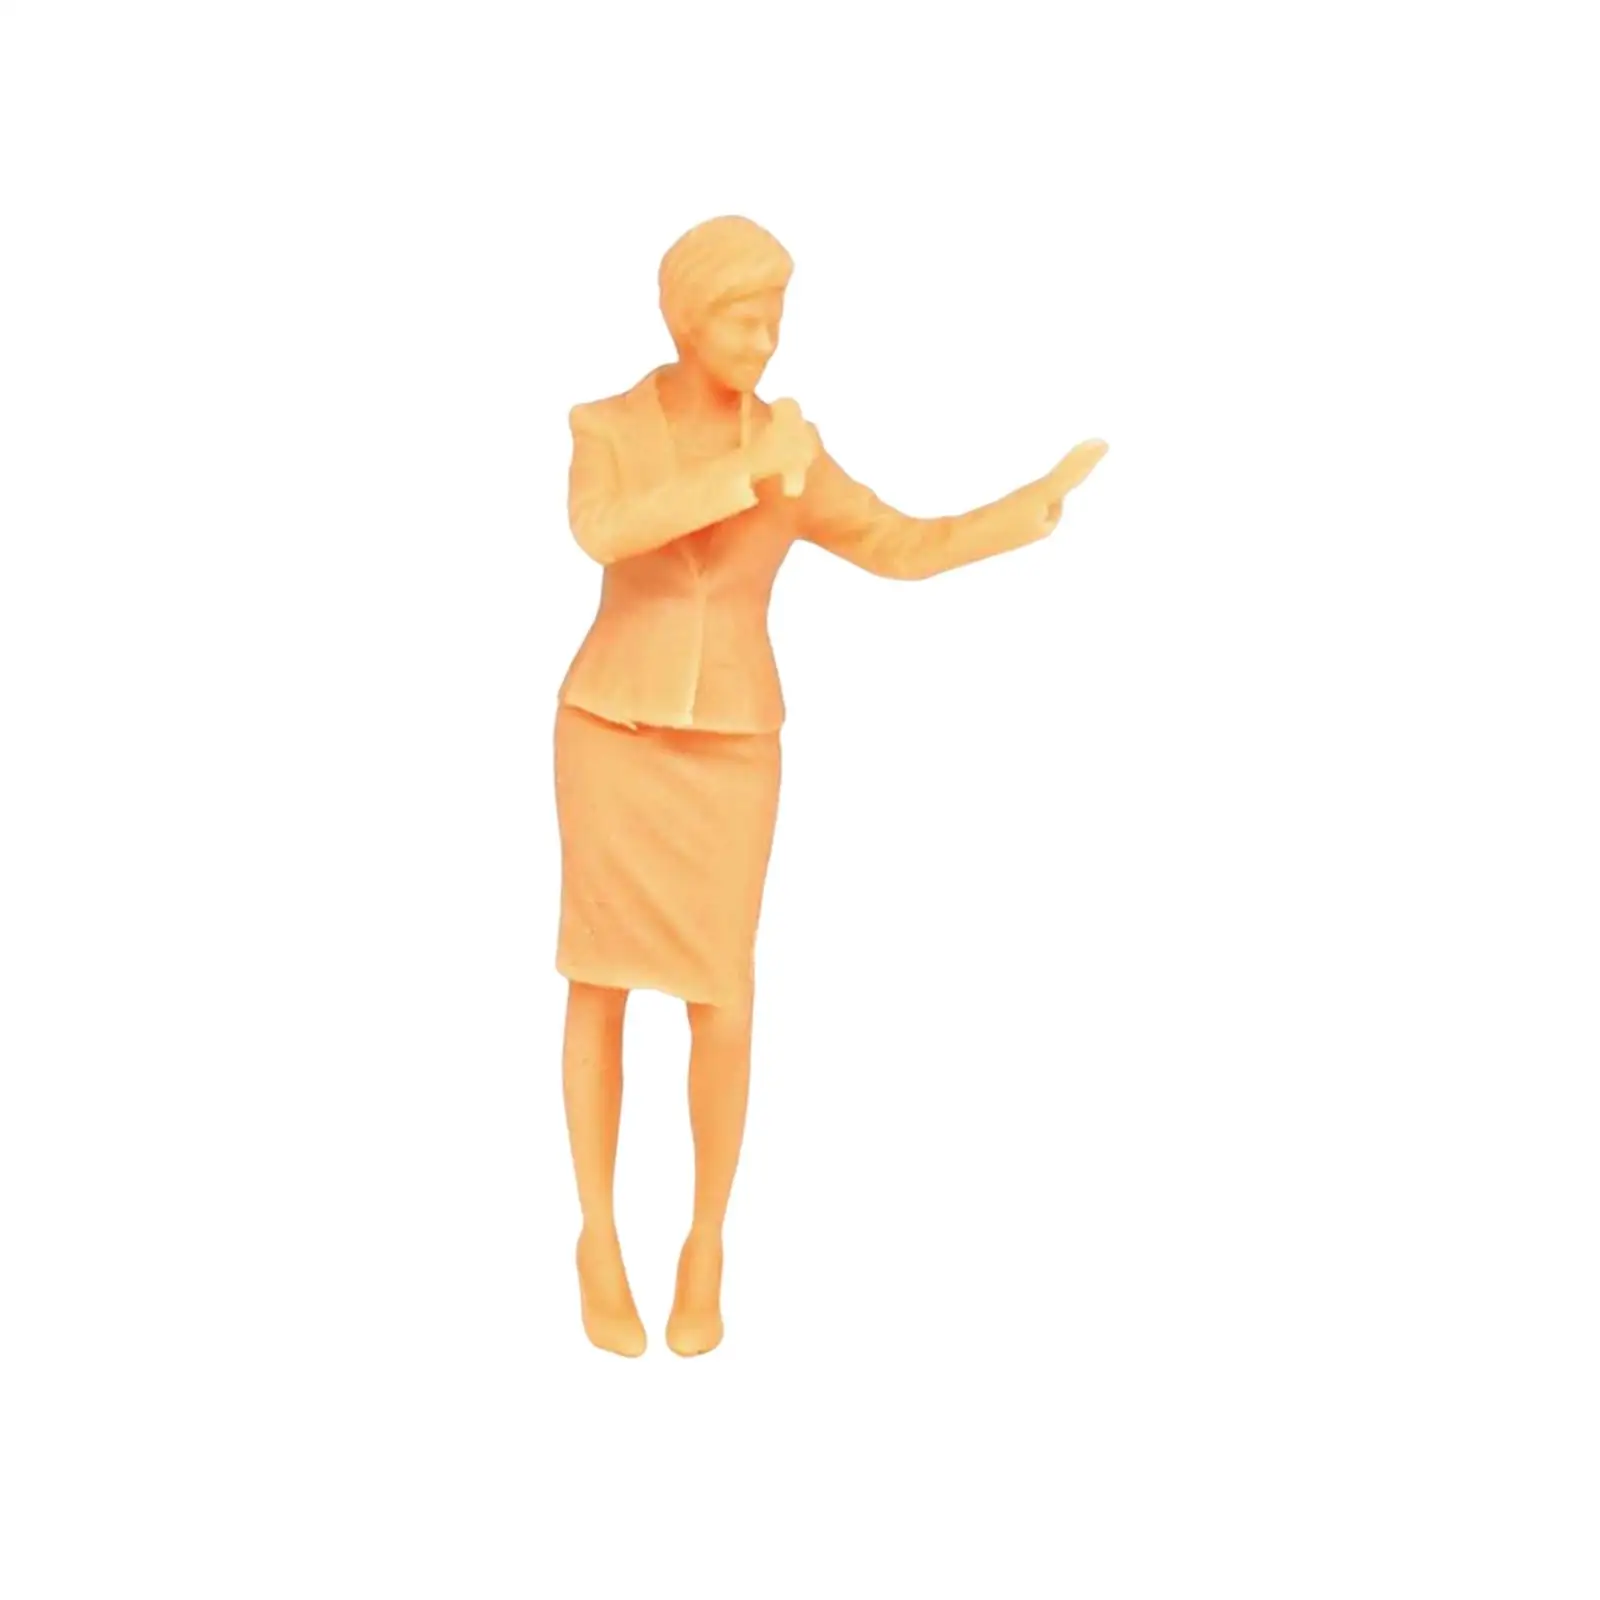 Unpainted Tiny People Photo Props Simulation Figurines 1/64 Scale Miniature Model Figures Diorama Layout DIY Scene Decor